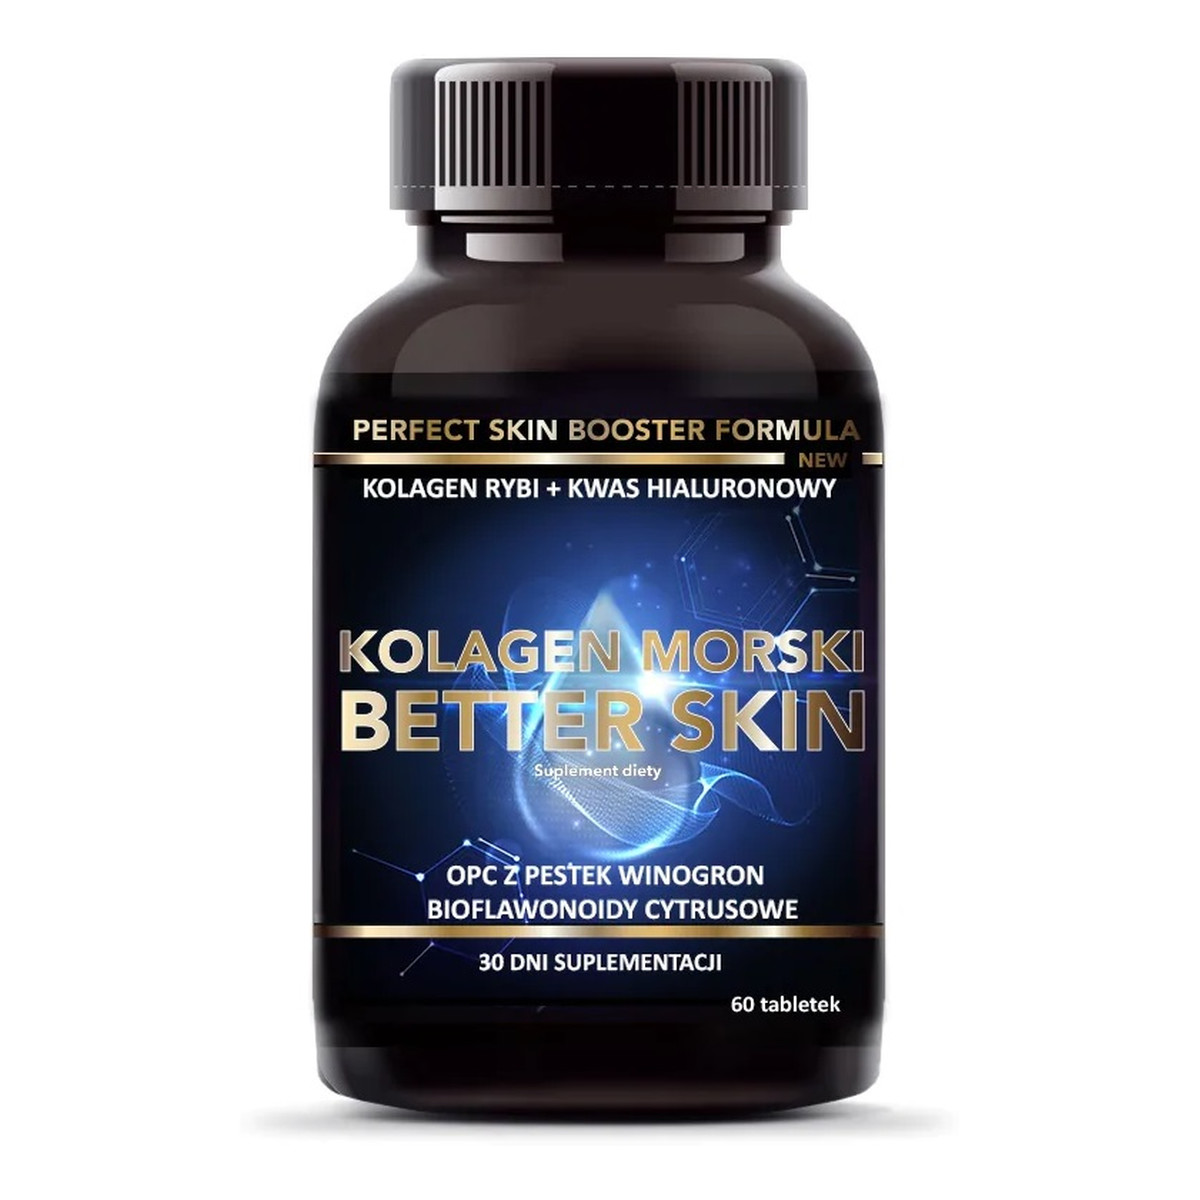 Intenson Kolagen morski better skin + witamina c + kwas hialuronowy suplement diety 60 tabletek